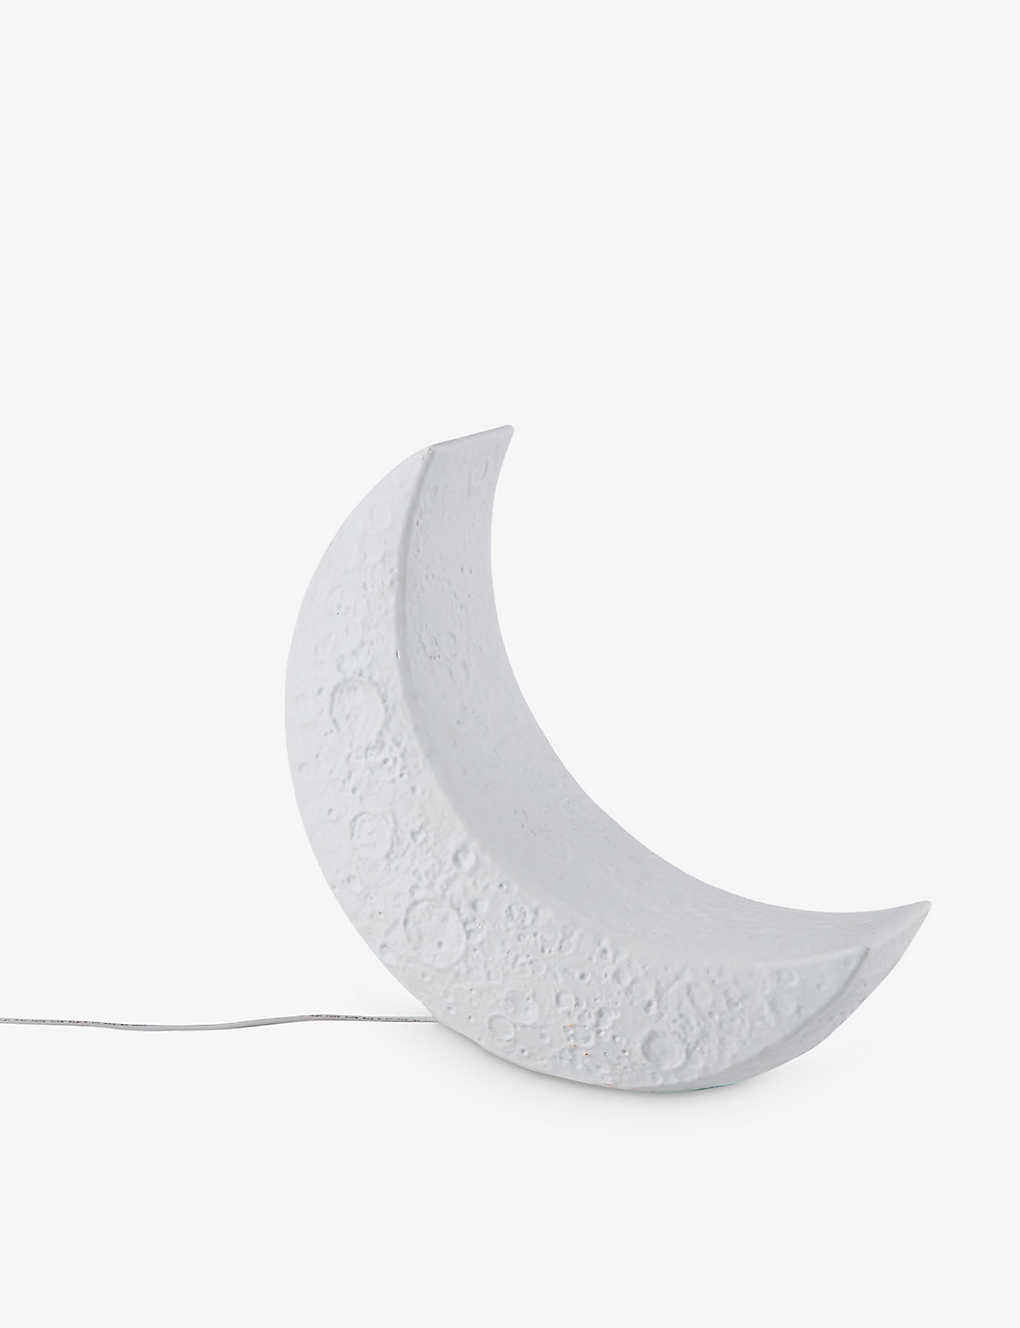 SELETTI My Little Moon crescent-shape table lamp 33cm